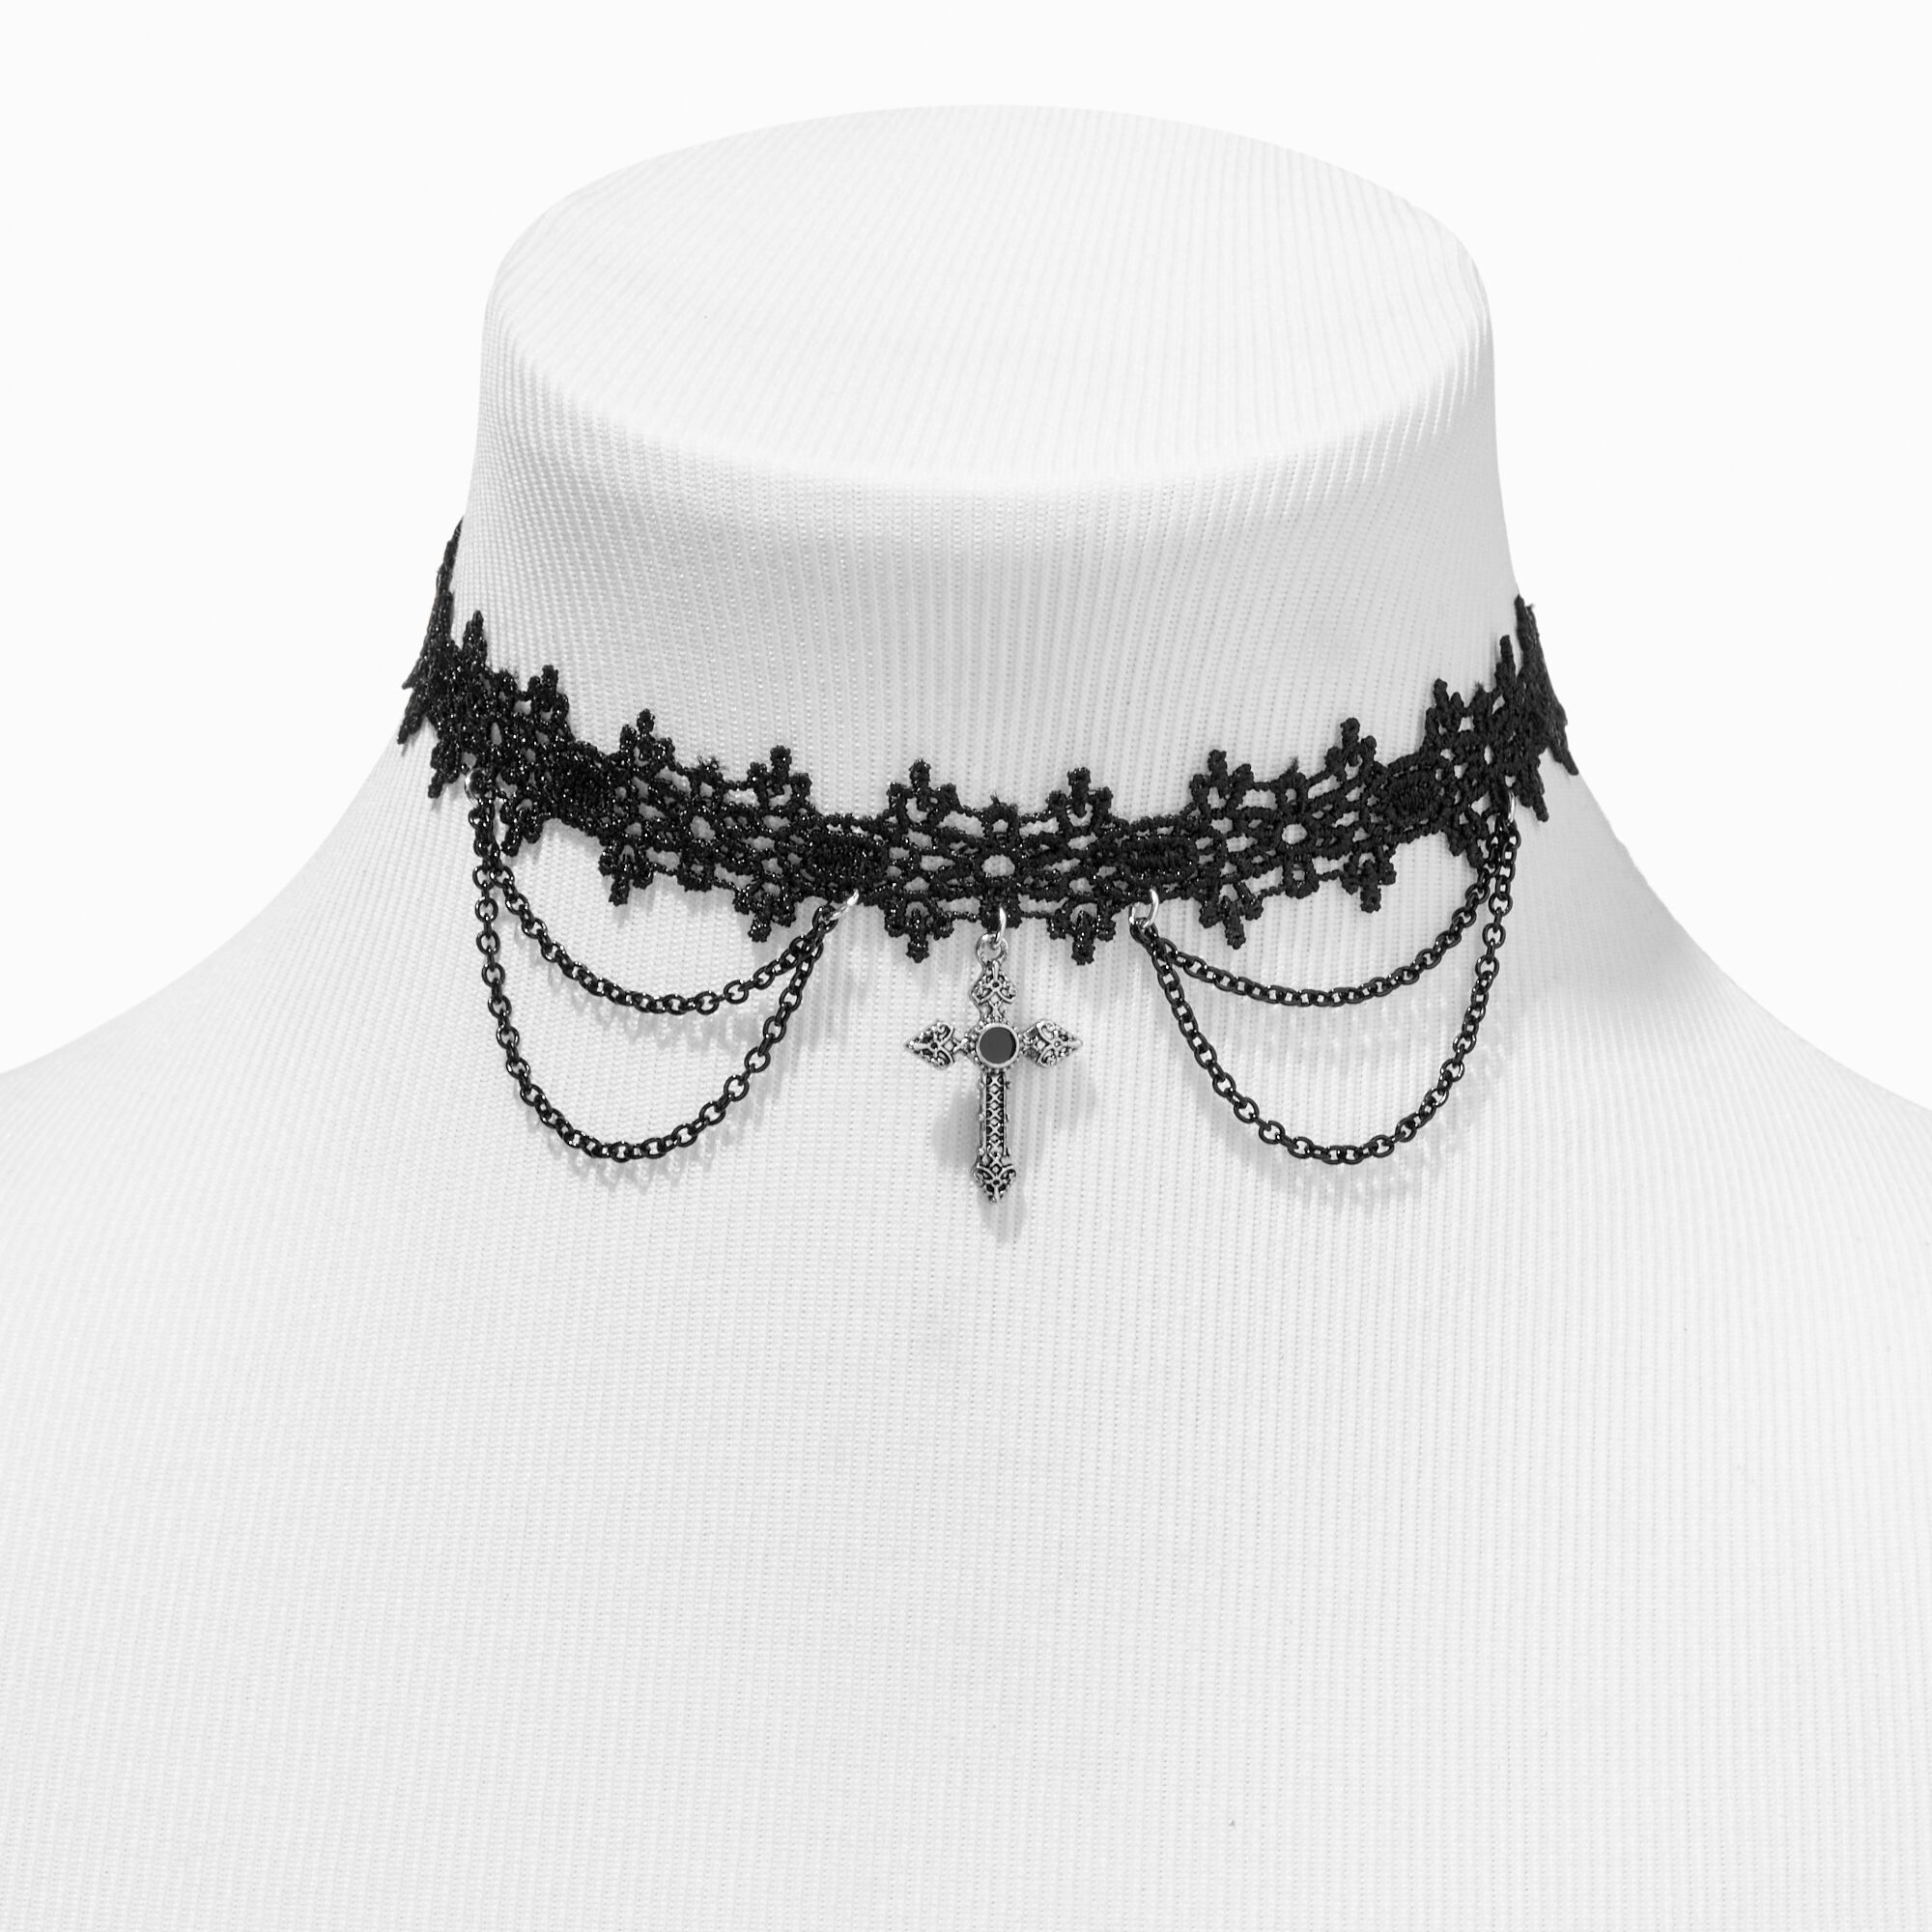 Mua Black Lace Gothic Choker Necklace, Punk Elegant Gear Pendant, for  Wedding Party Halloween Costume Cosplay Women Girls. tại Pandore Fashion |  Tiki